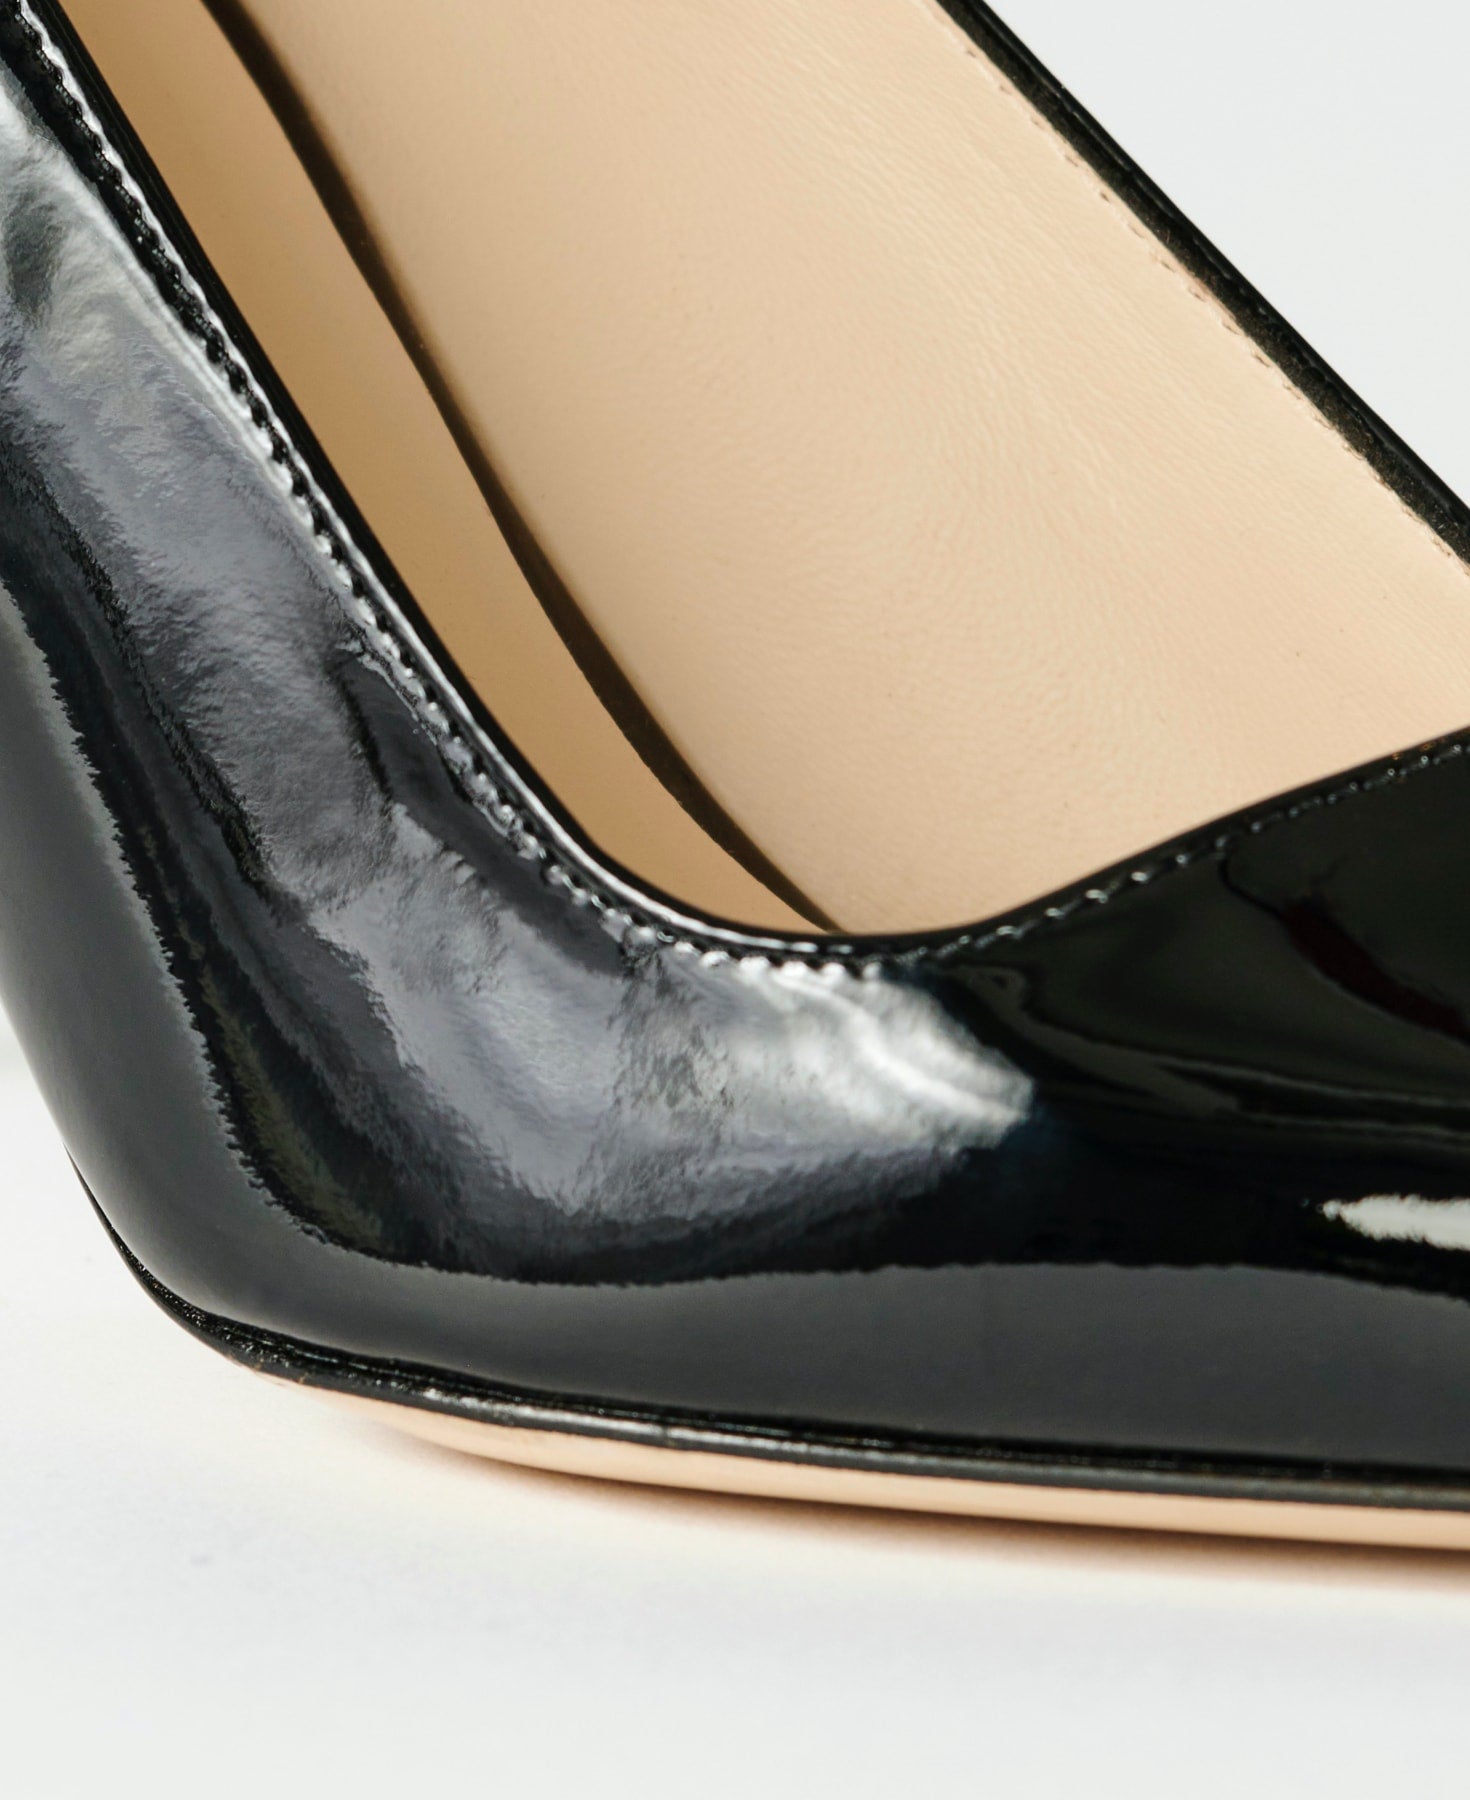 BLACK PATENT-fmajor comfortable designer heels